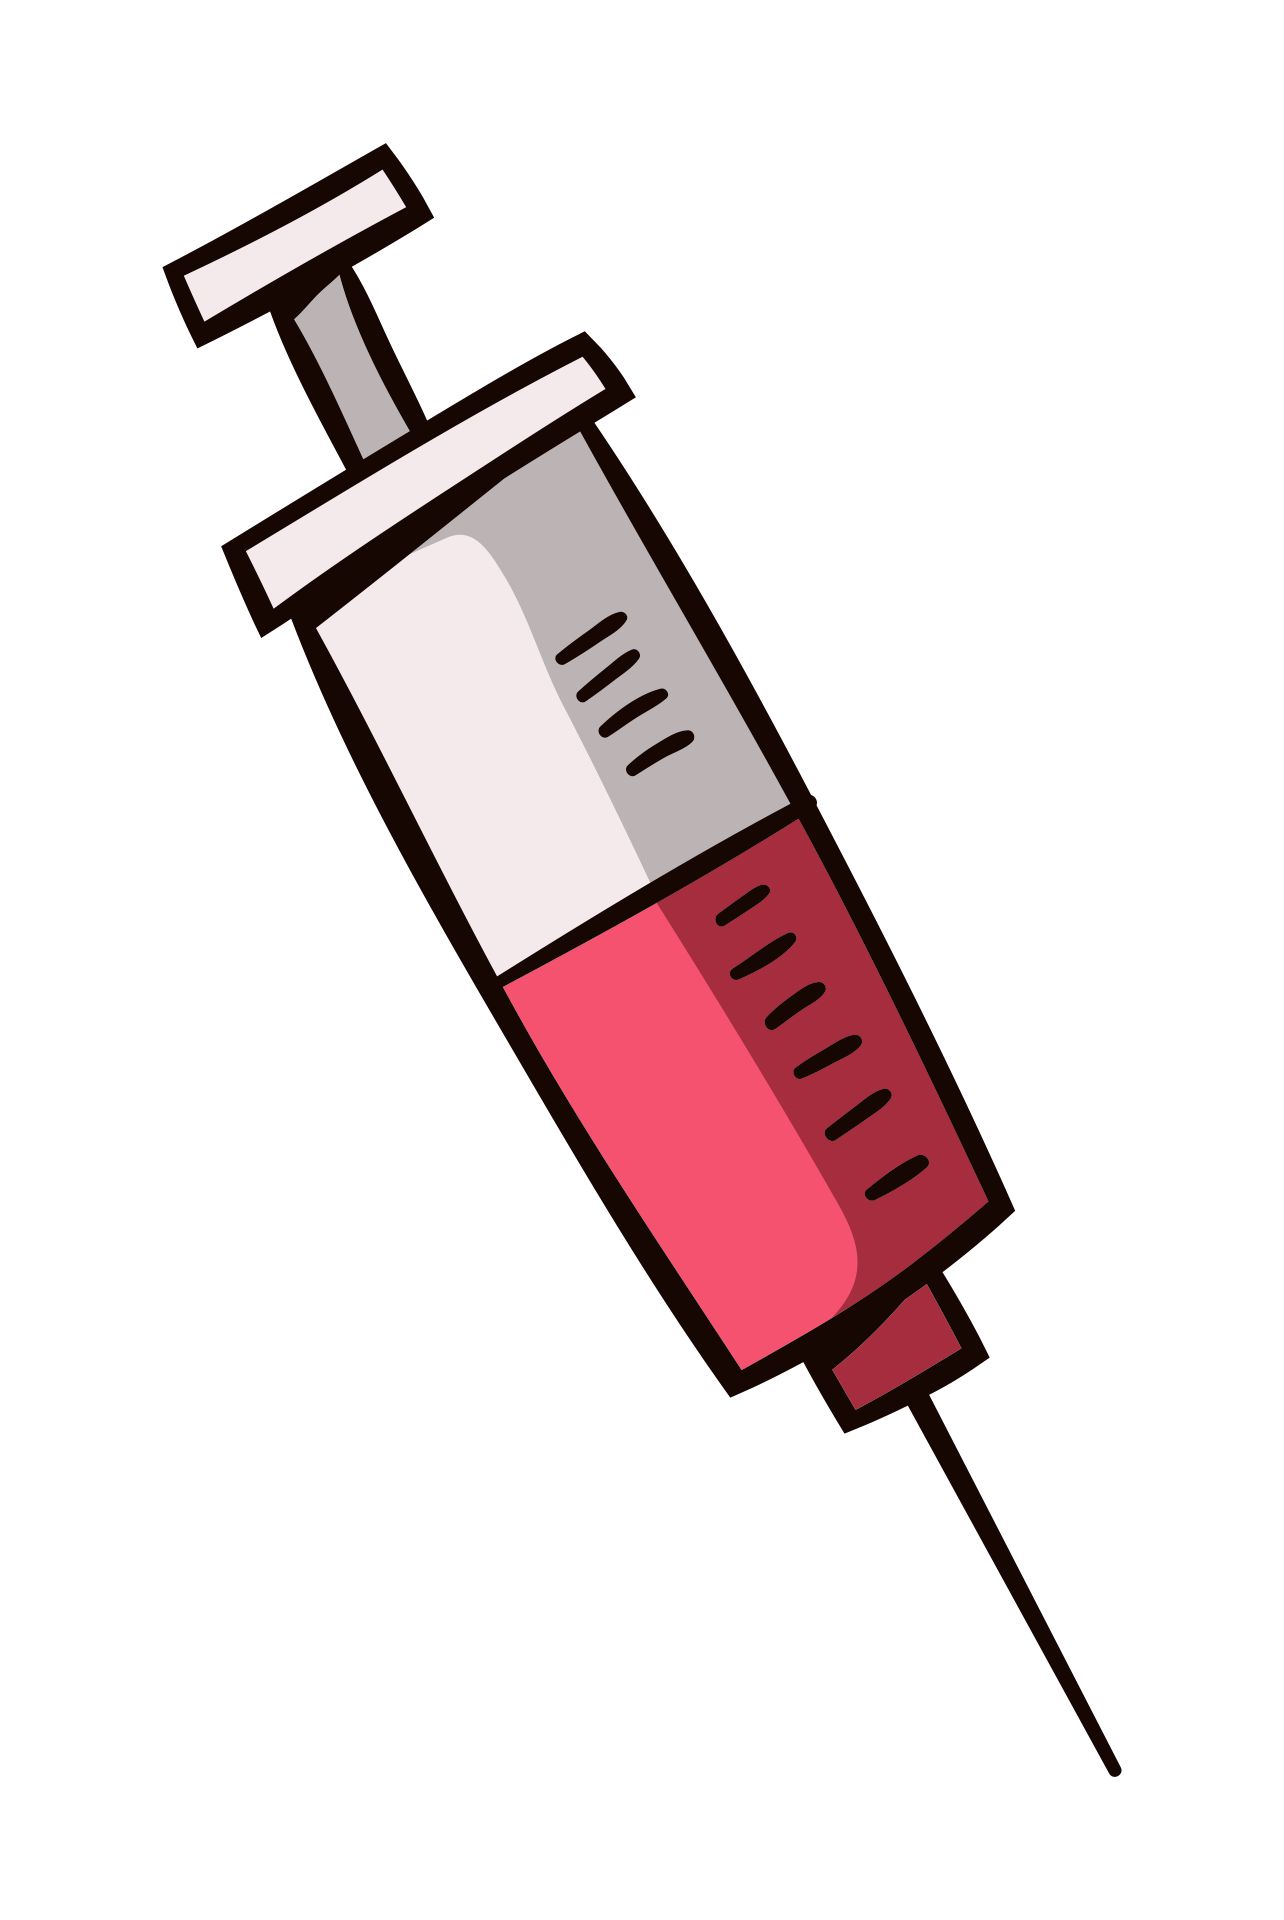 Cartoon Syringe Clip Art